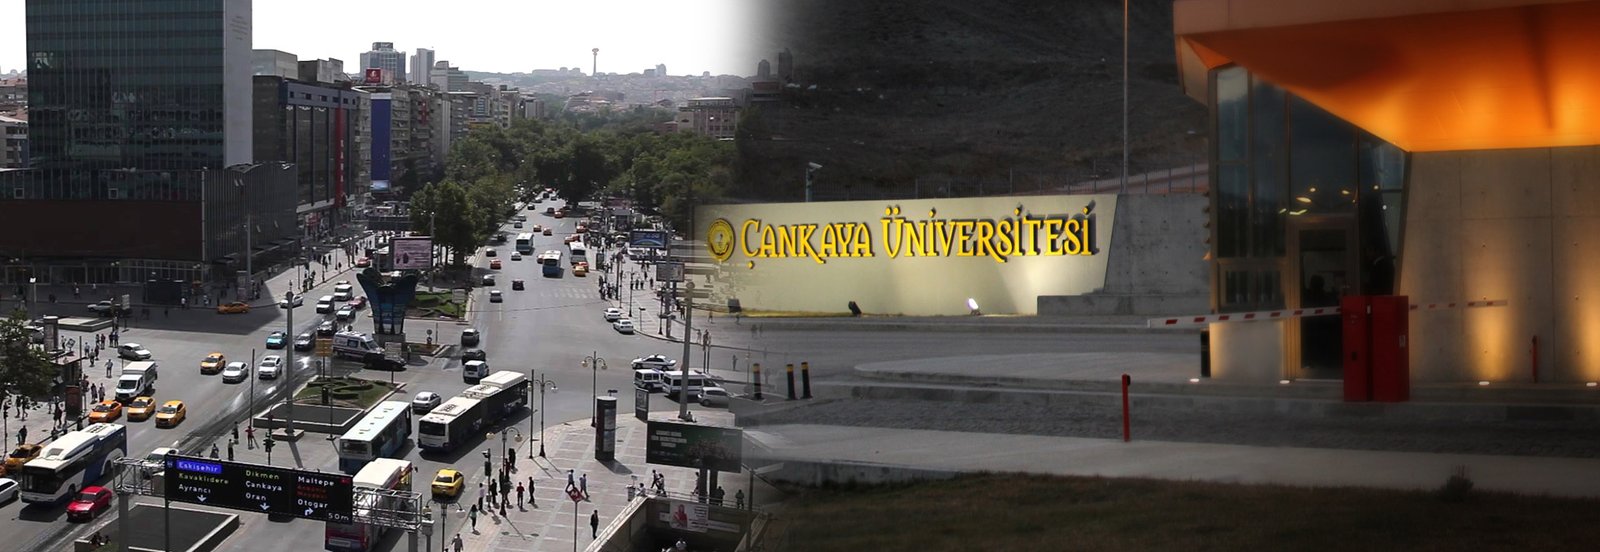 How To Go To Çankaya University From Ankara Kızılay